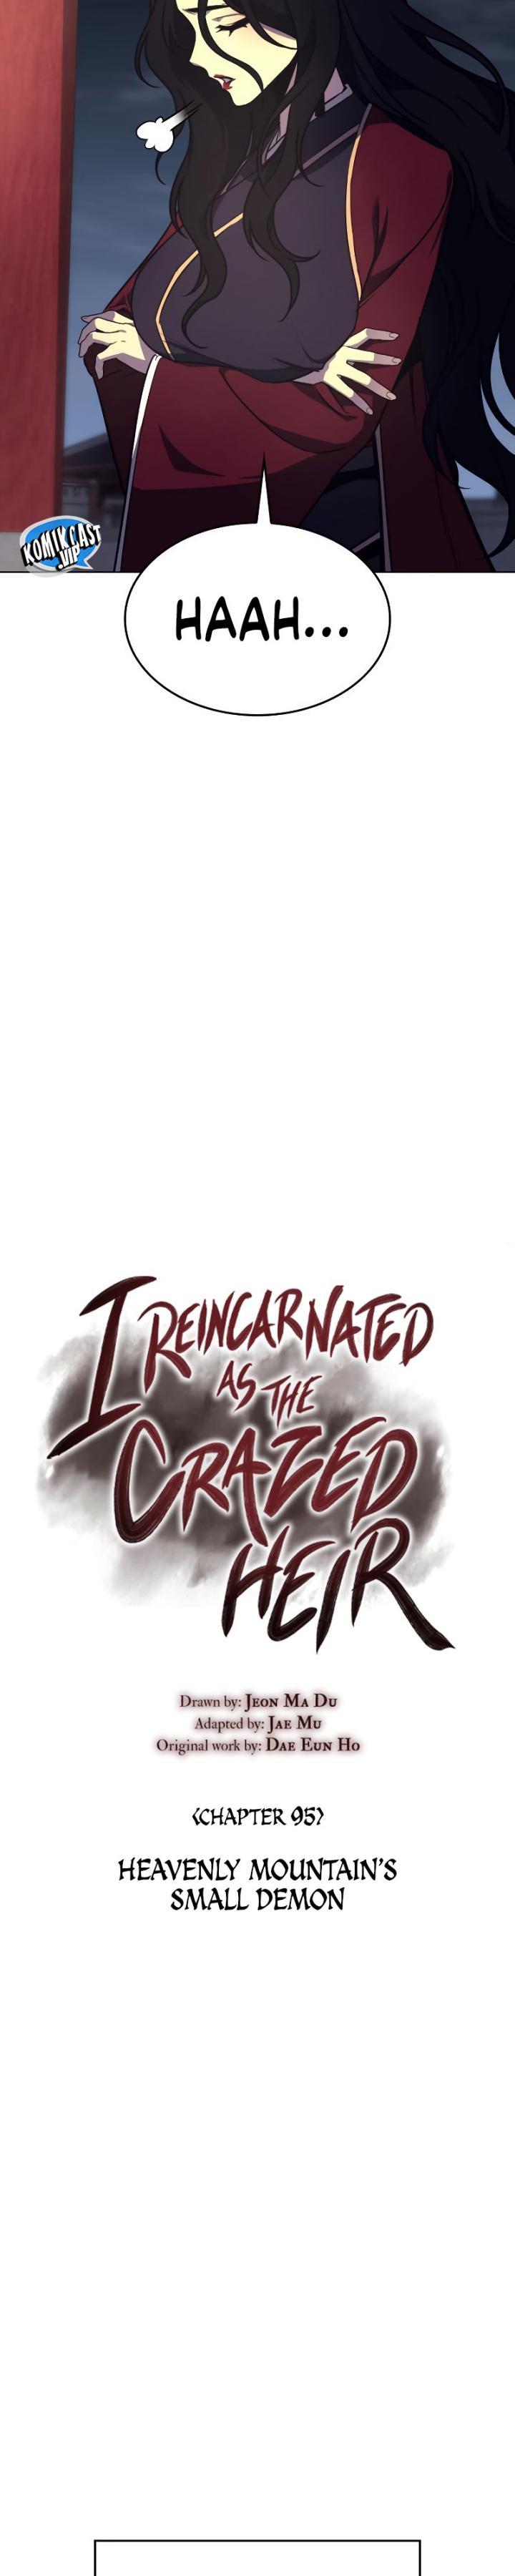 I Reincarnated As The Crazed Heir Chapter 95